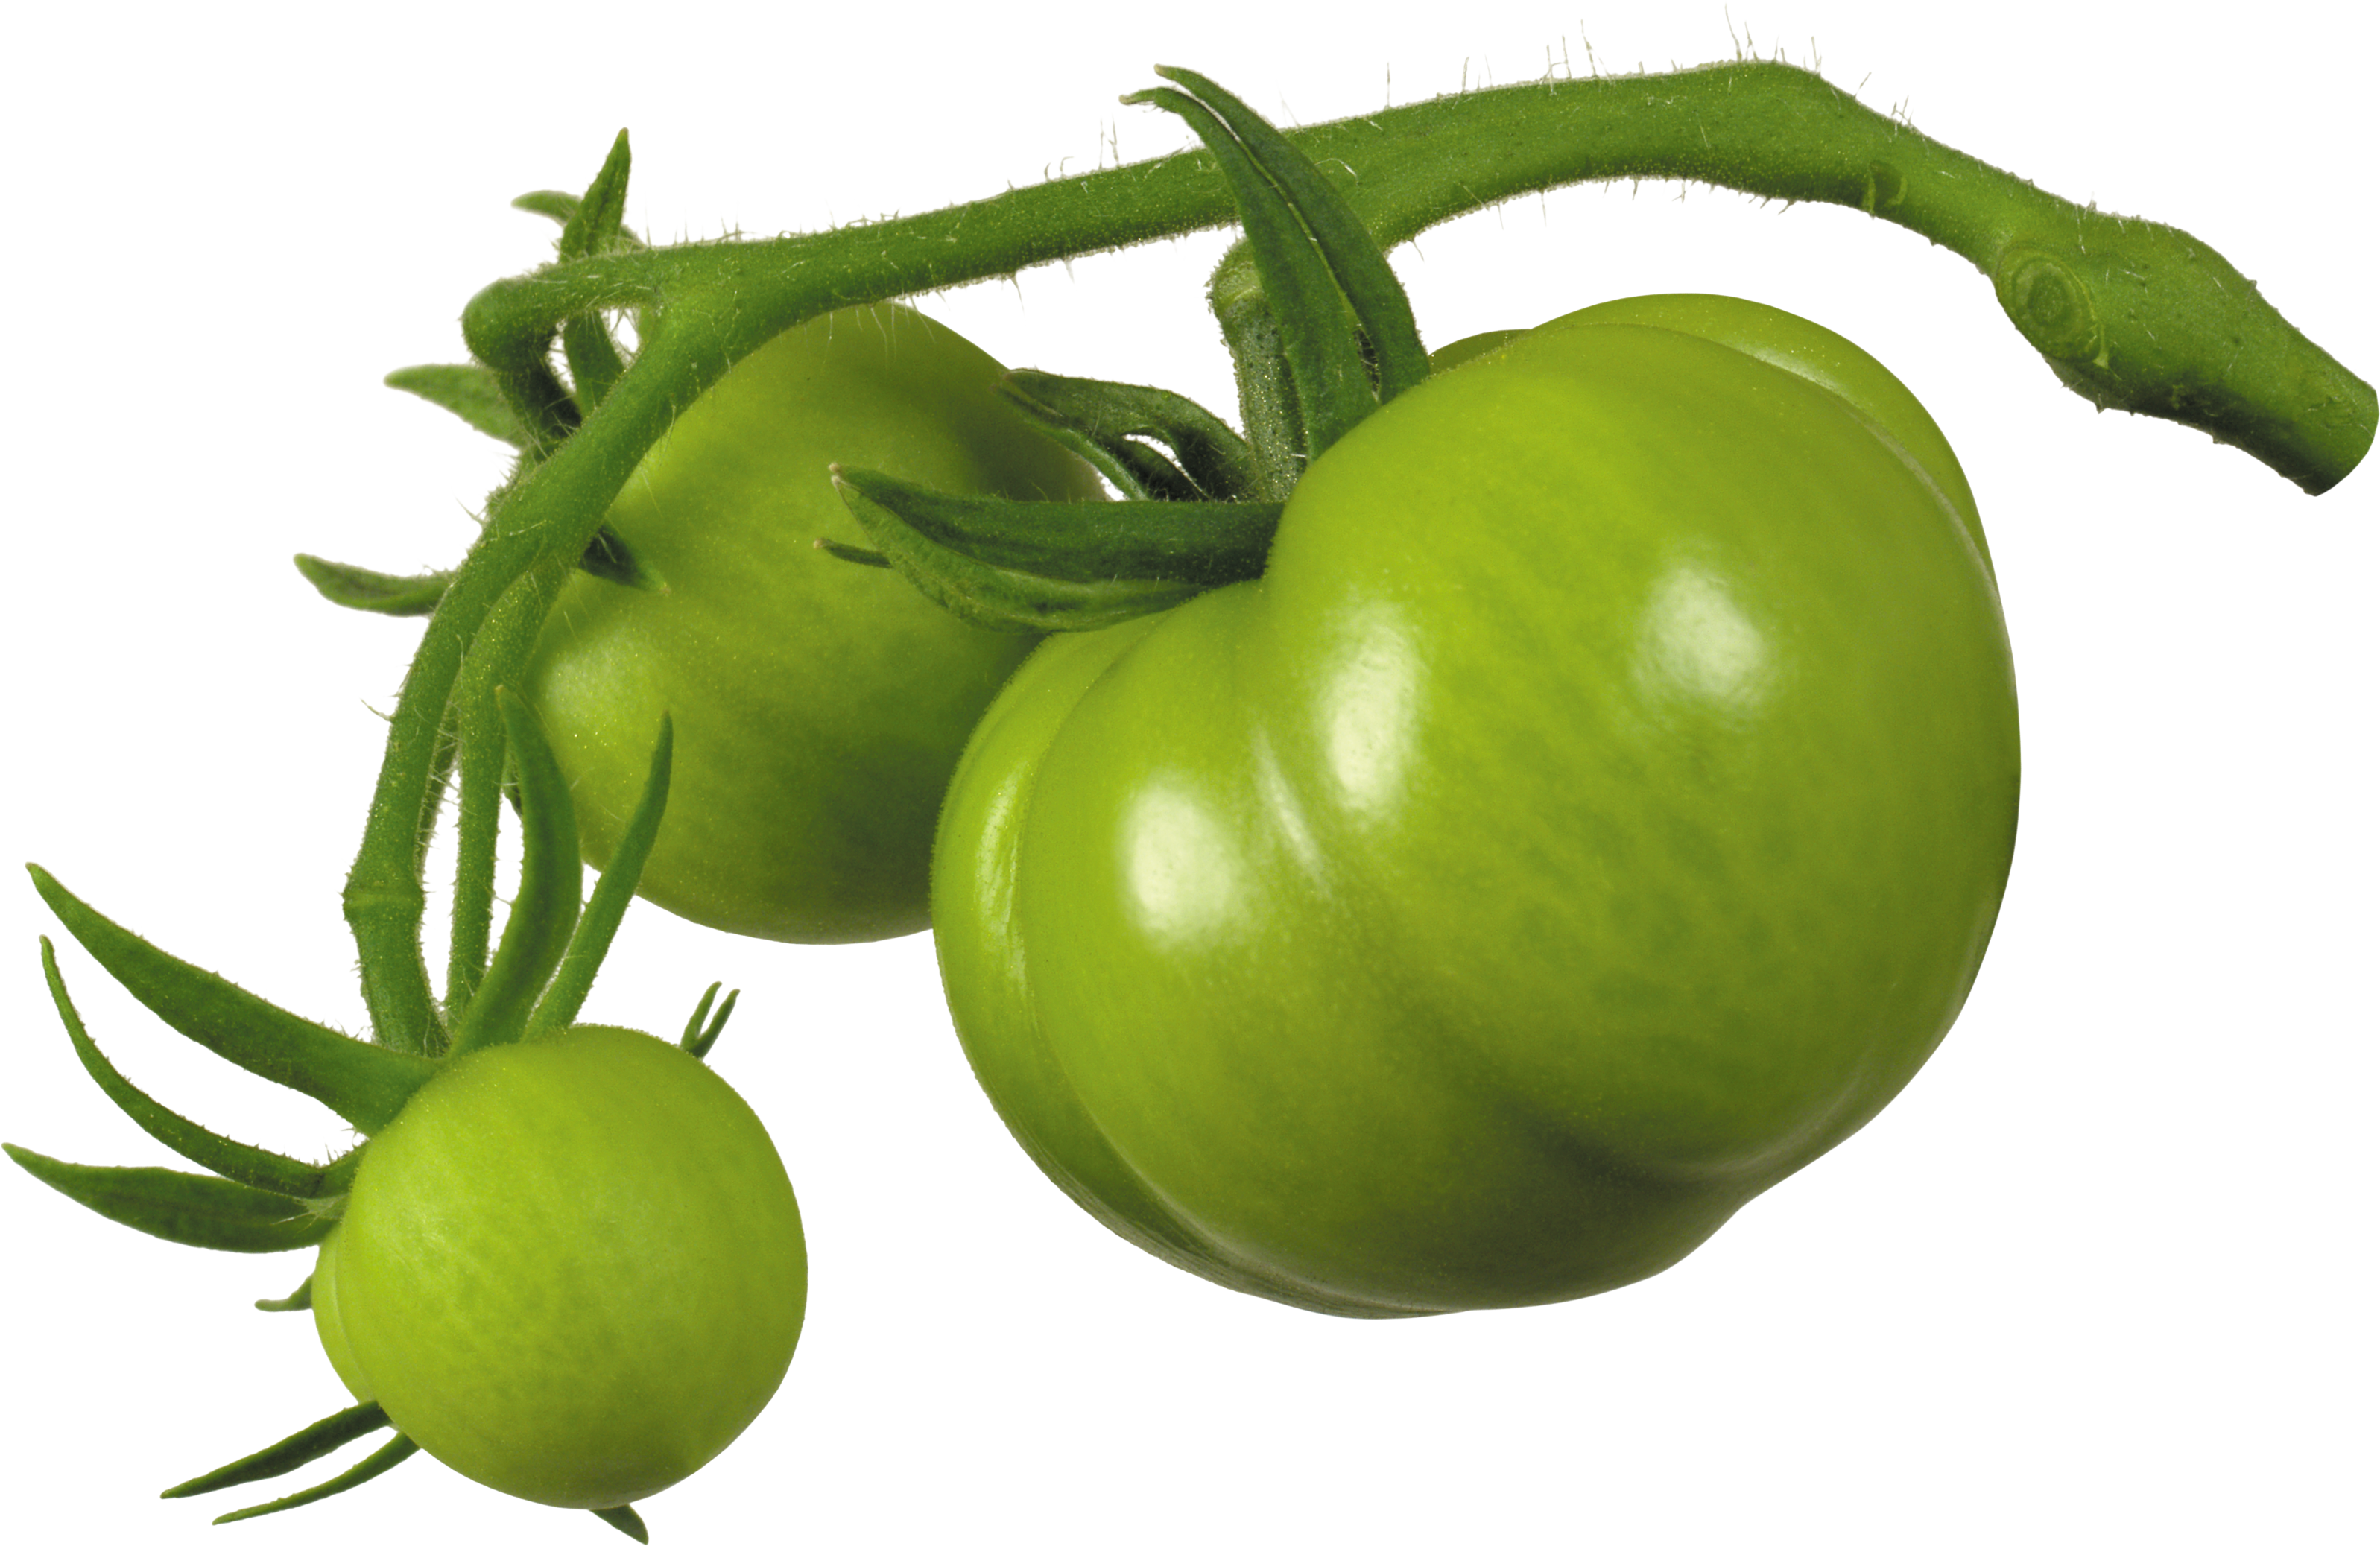 Pomodori verdi sul ramo